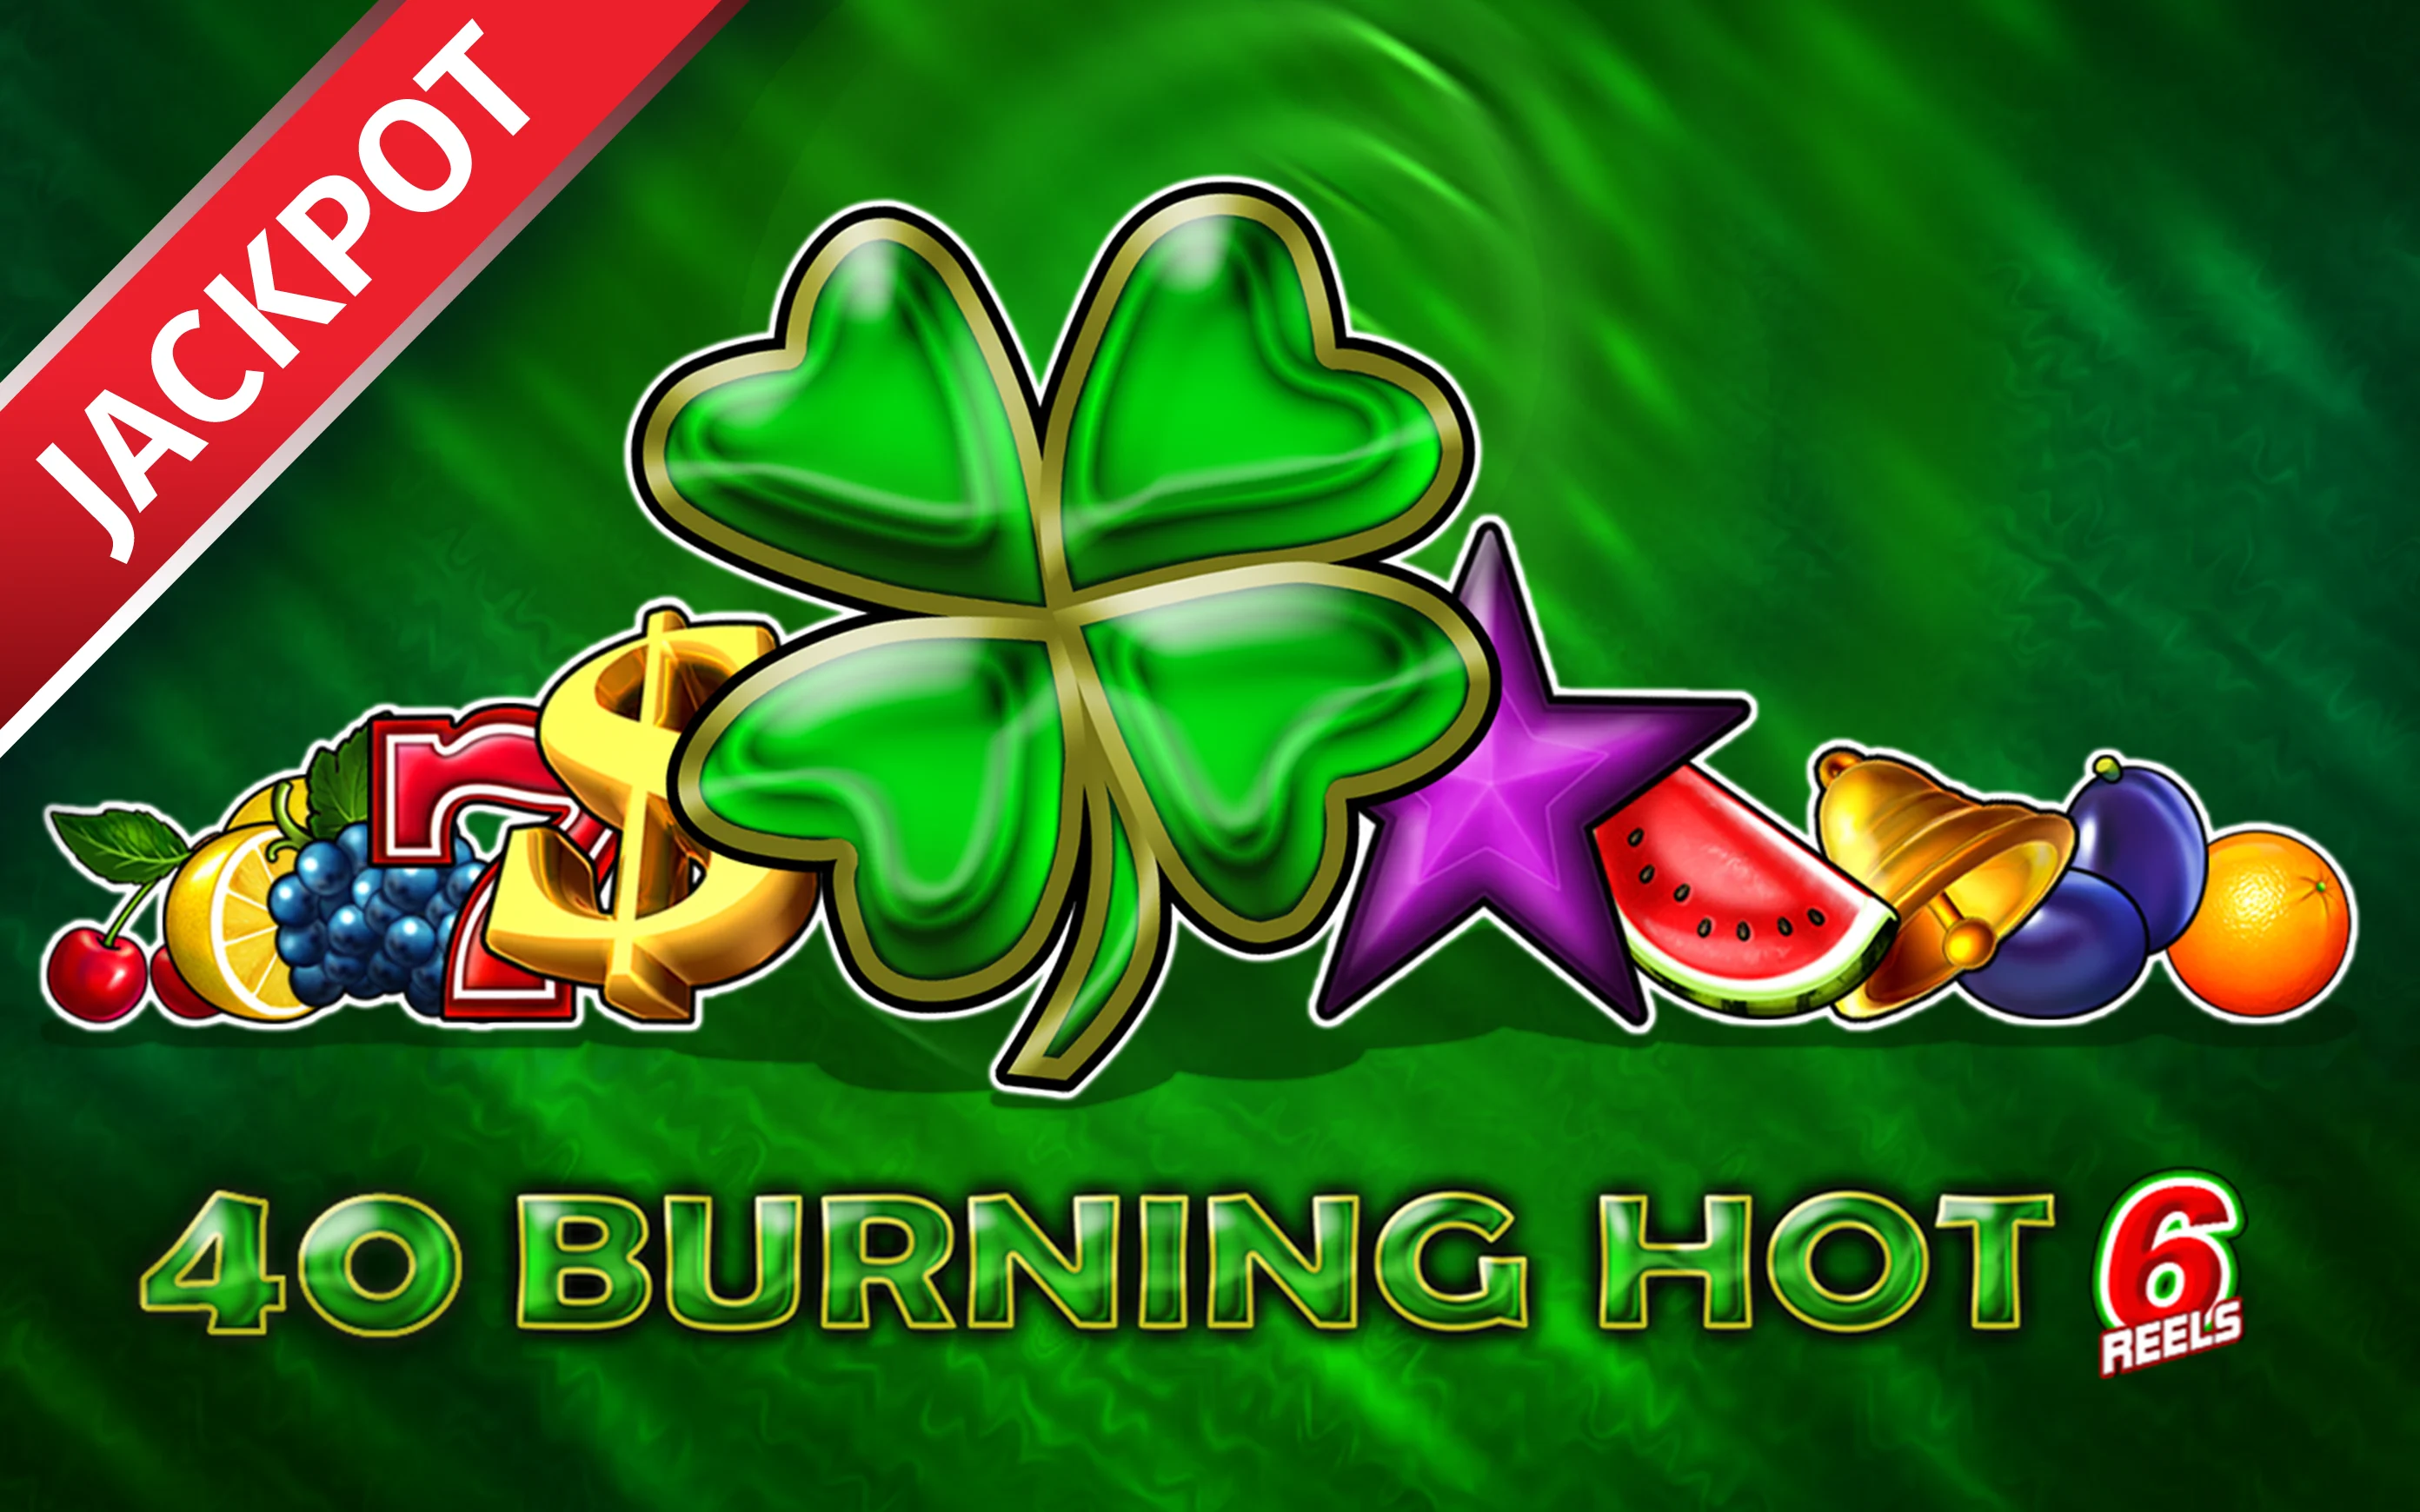 Play 40 Burning Hot 6 Reels on Starcasino.be online casino